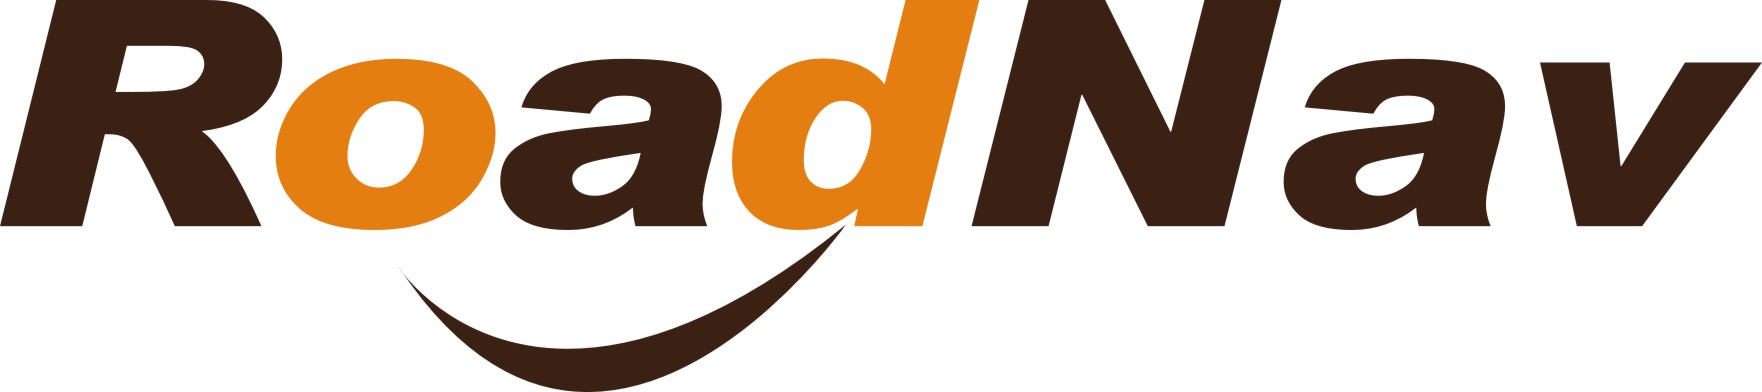 roadnav logo